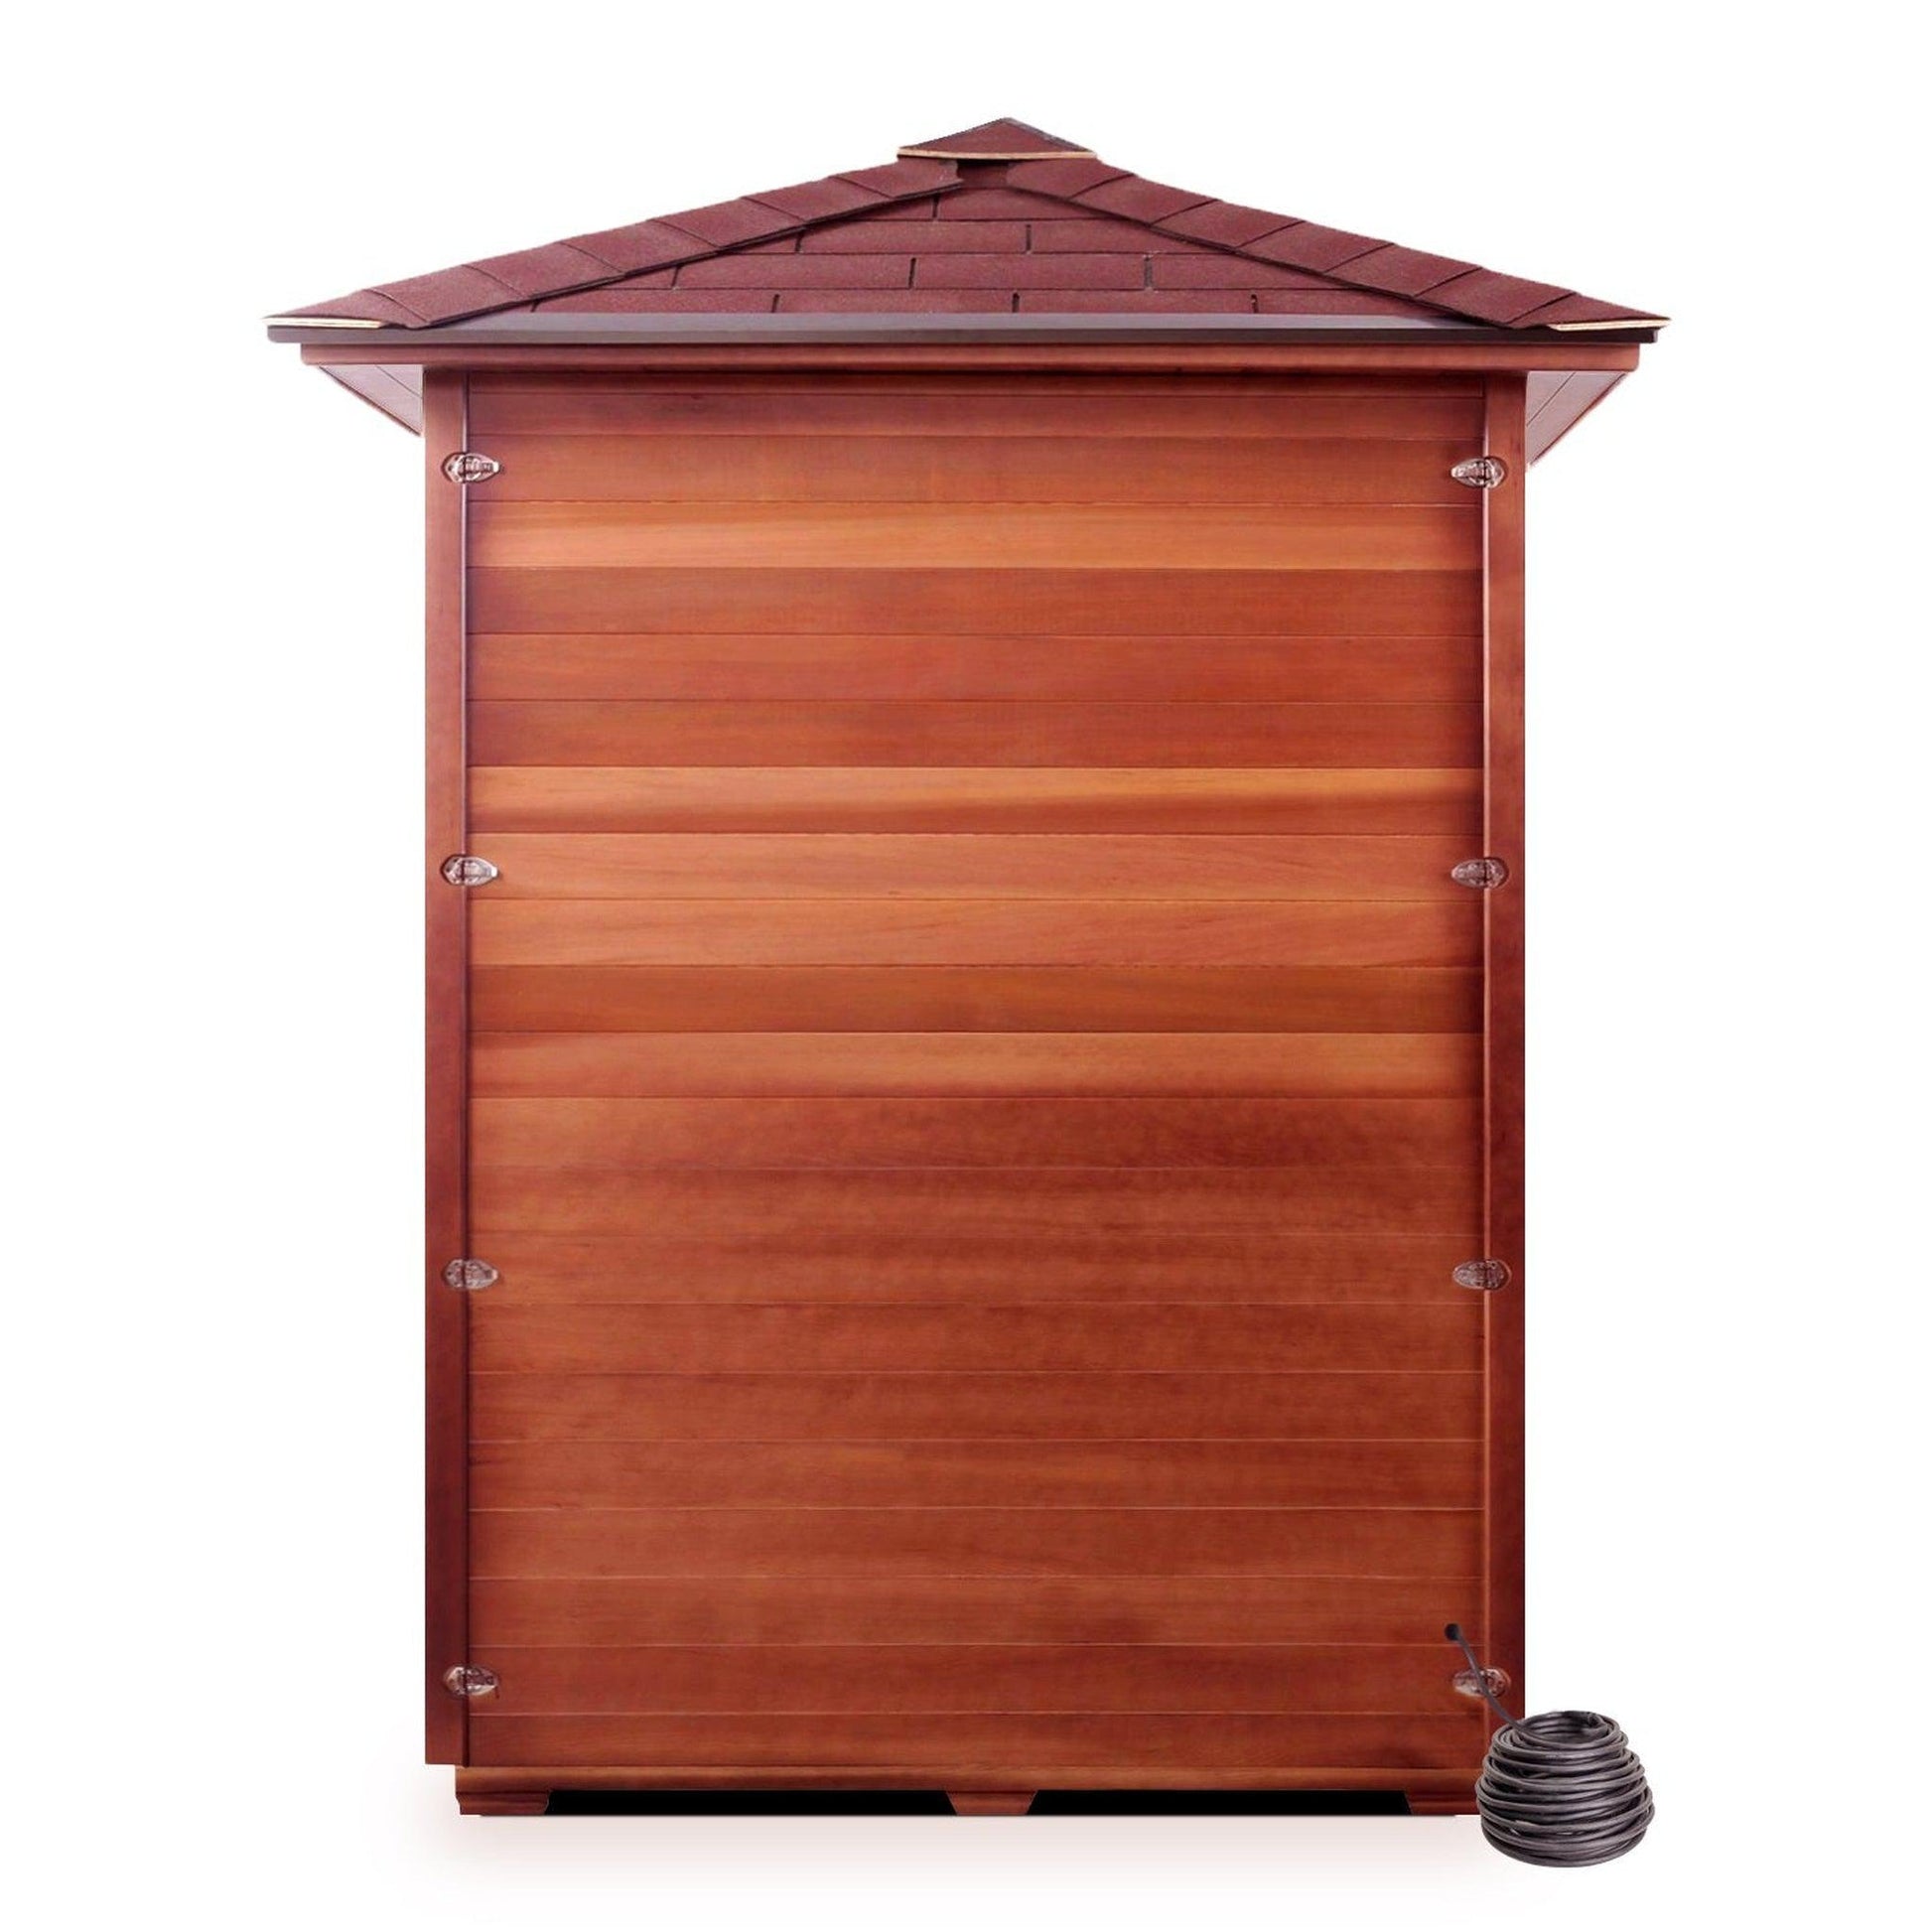 Enlighten InfraNature Original Sierra 3-Person Peak Roof Full Spectrum Infrared Outdoor Sauna